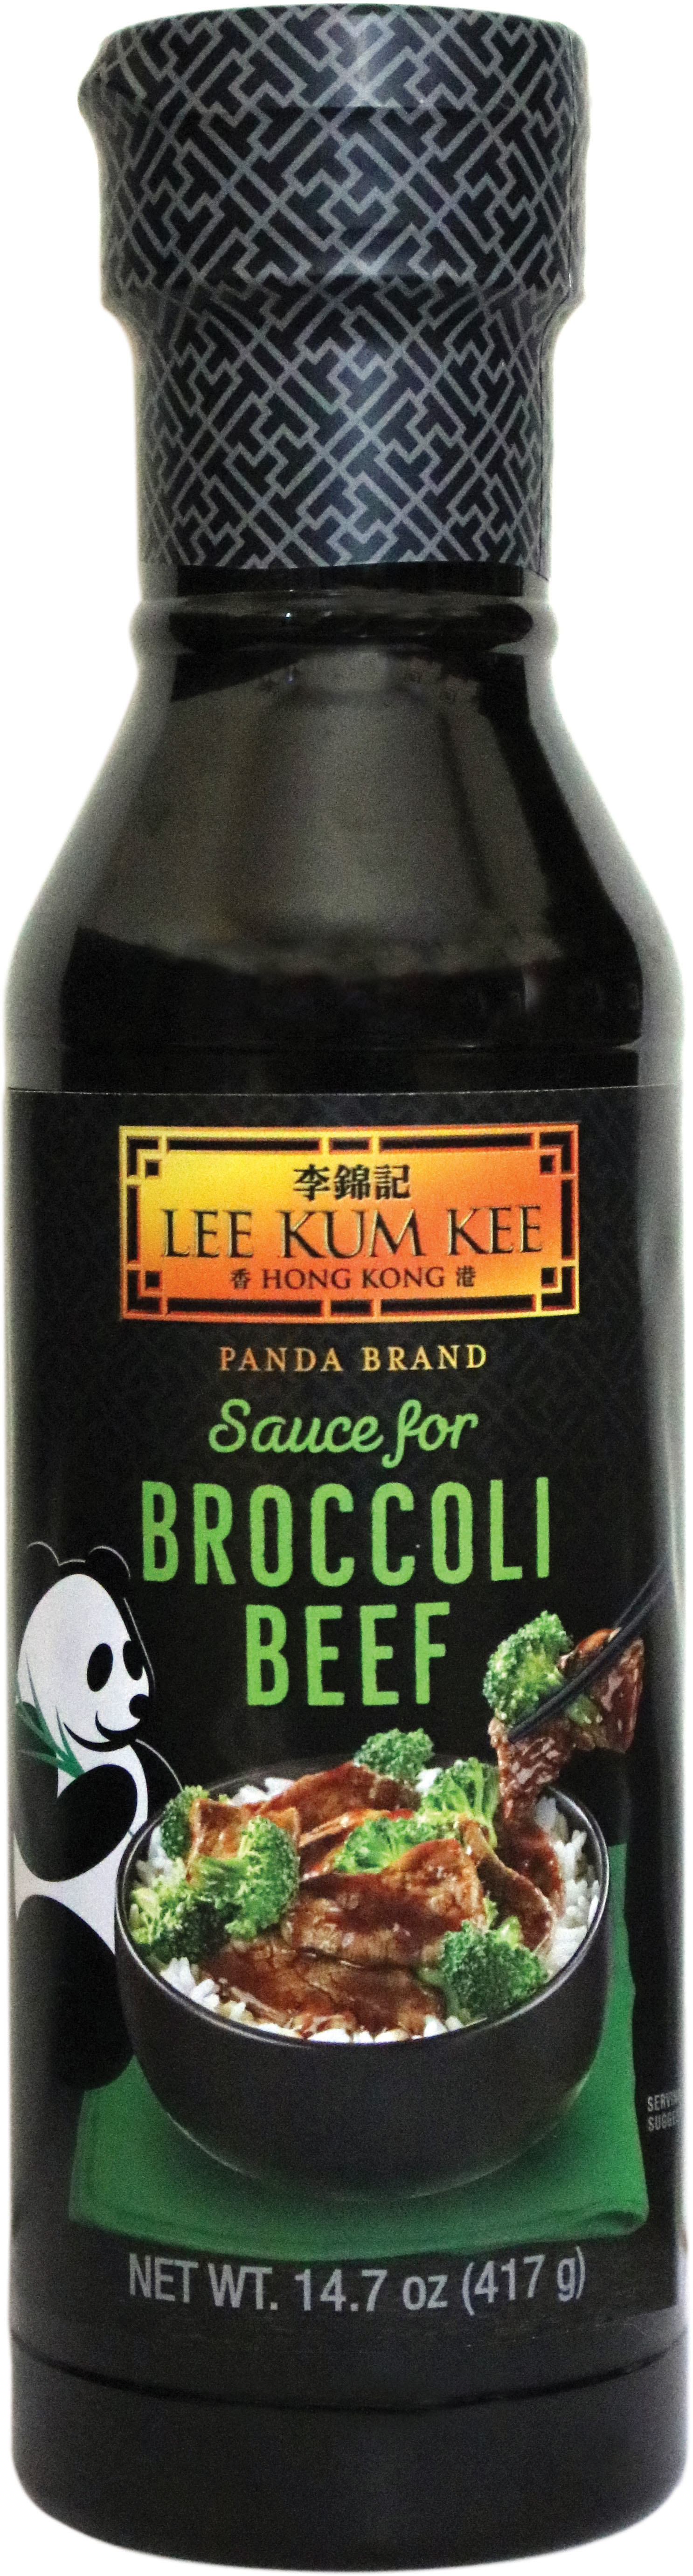 Panda Brand Sauce for Broccoli Beef - 14.7 oz, Bottle